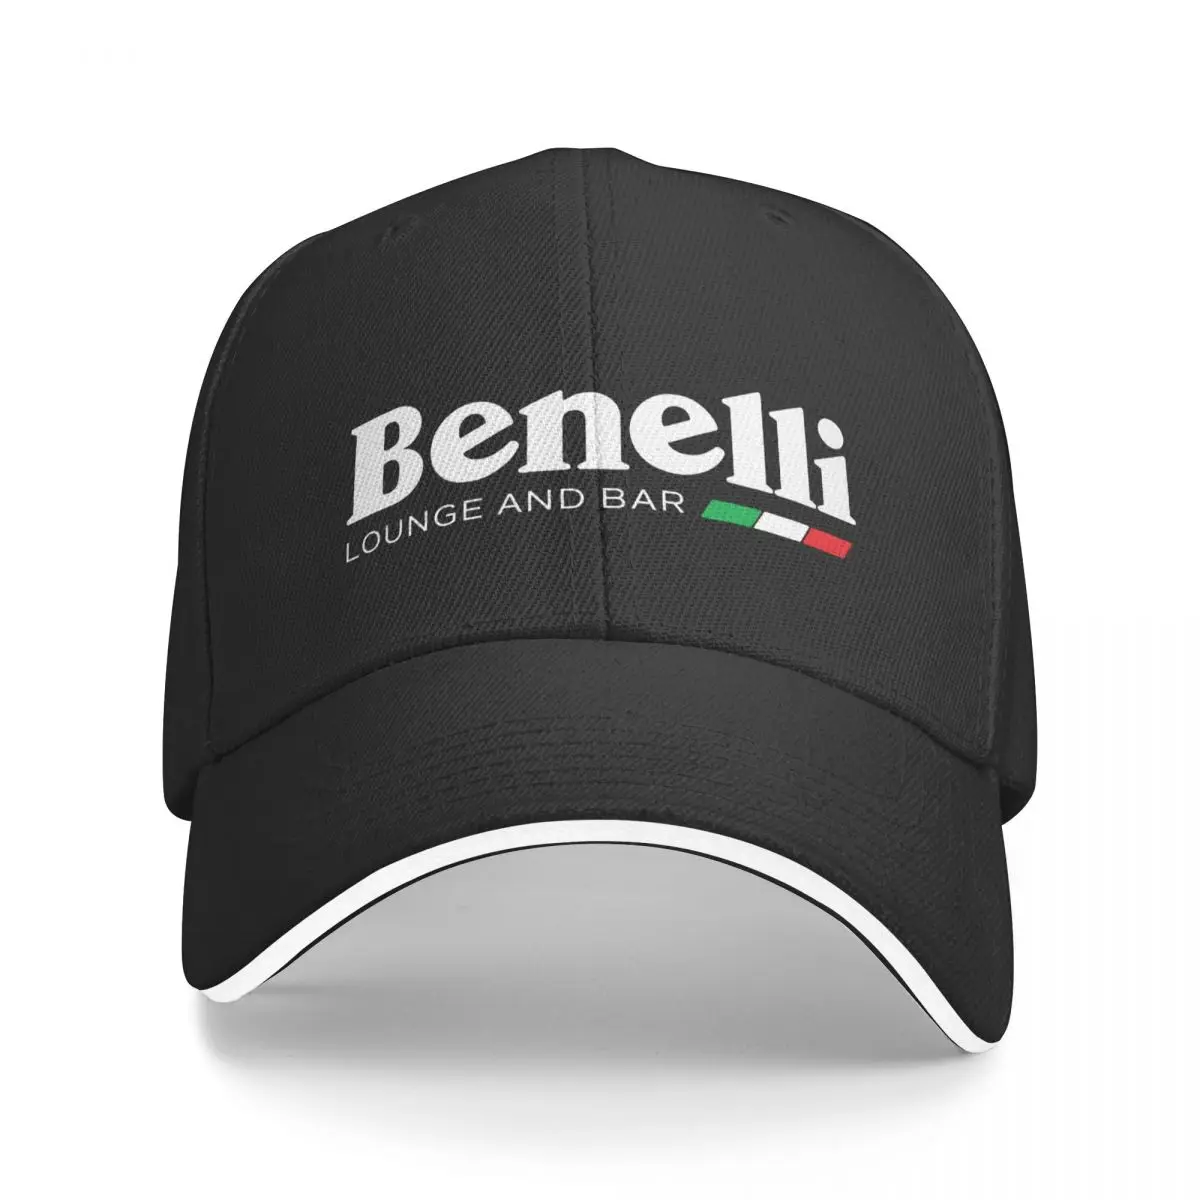 

Motorcycle Club Benellis Trucker Hat Stuff Vintage Snapback Cap For Unisex Style Casquette Adjustable